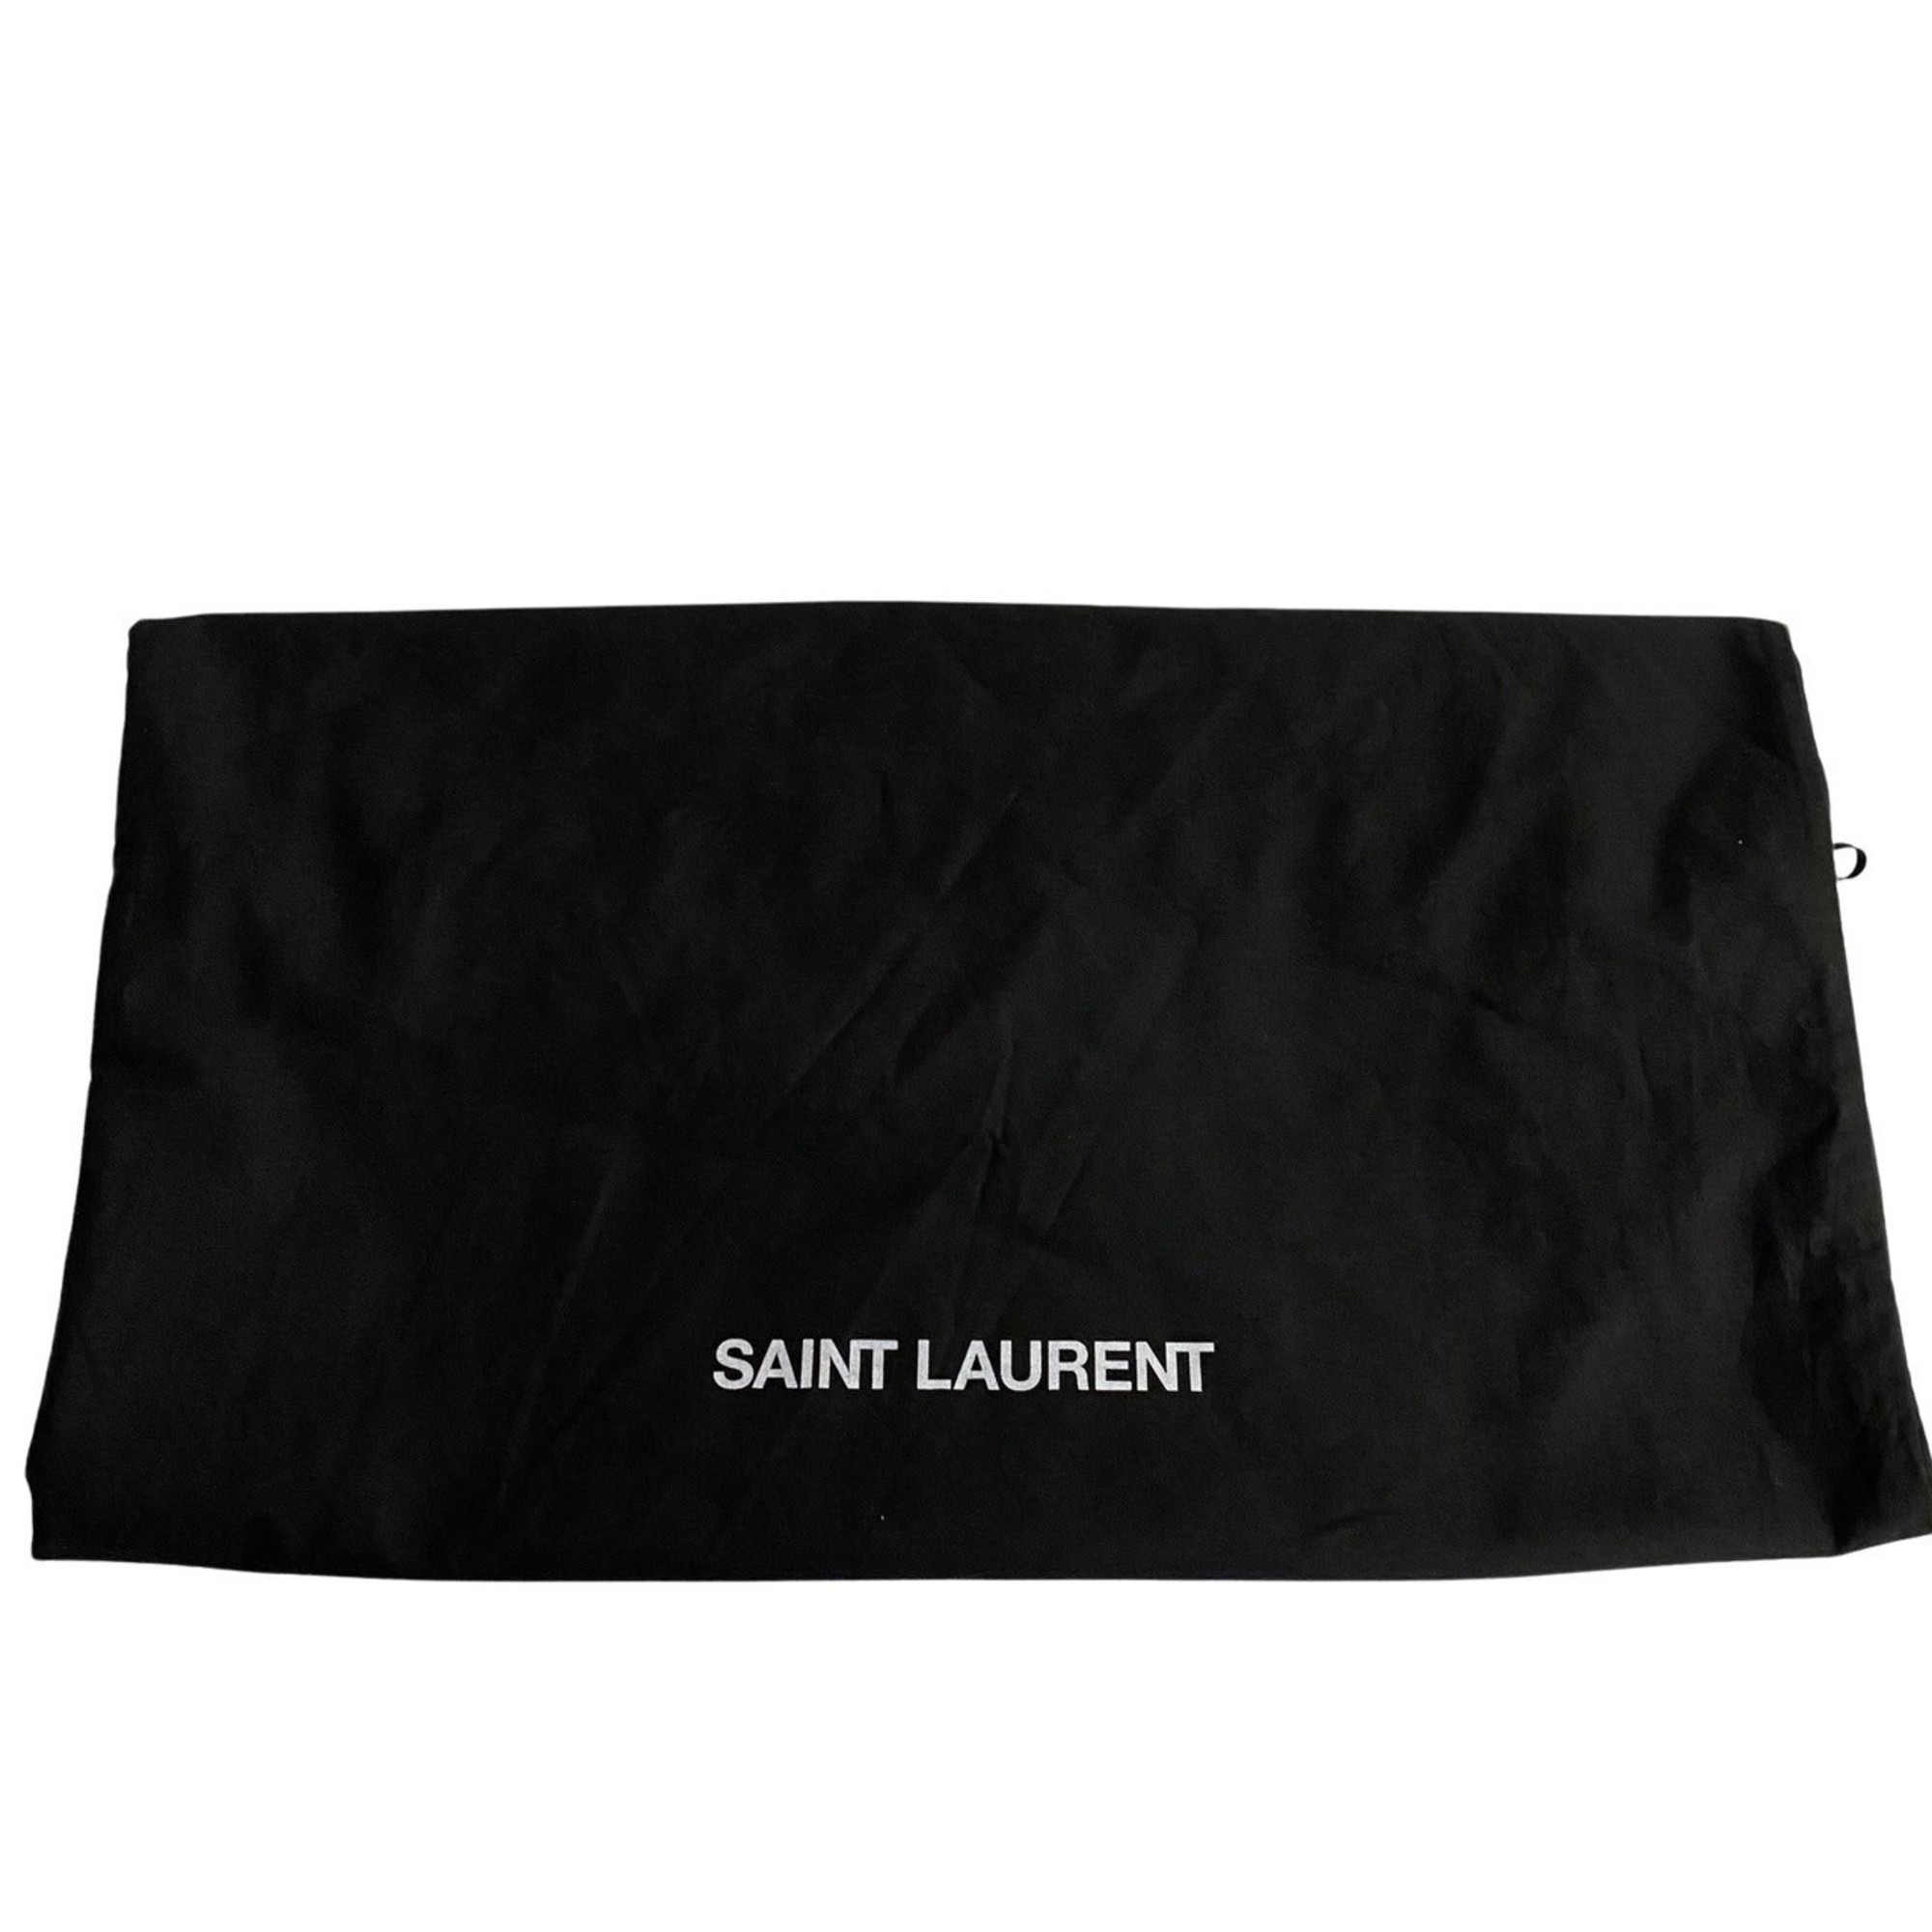 Yves Saint Laurent rive gauche leather genuine felt tote bag handbag black 23269